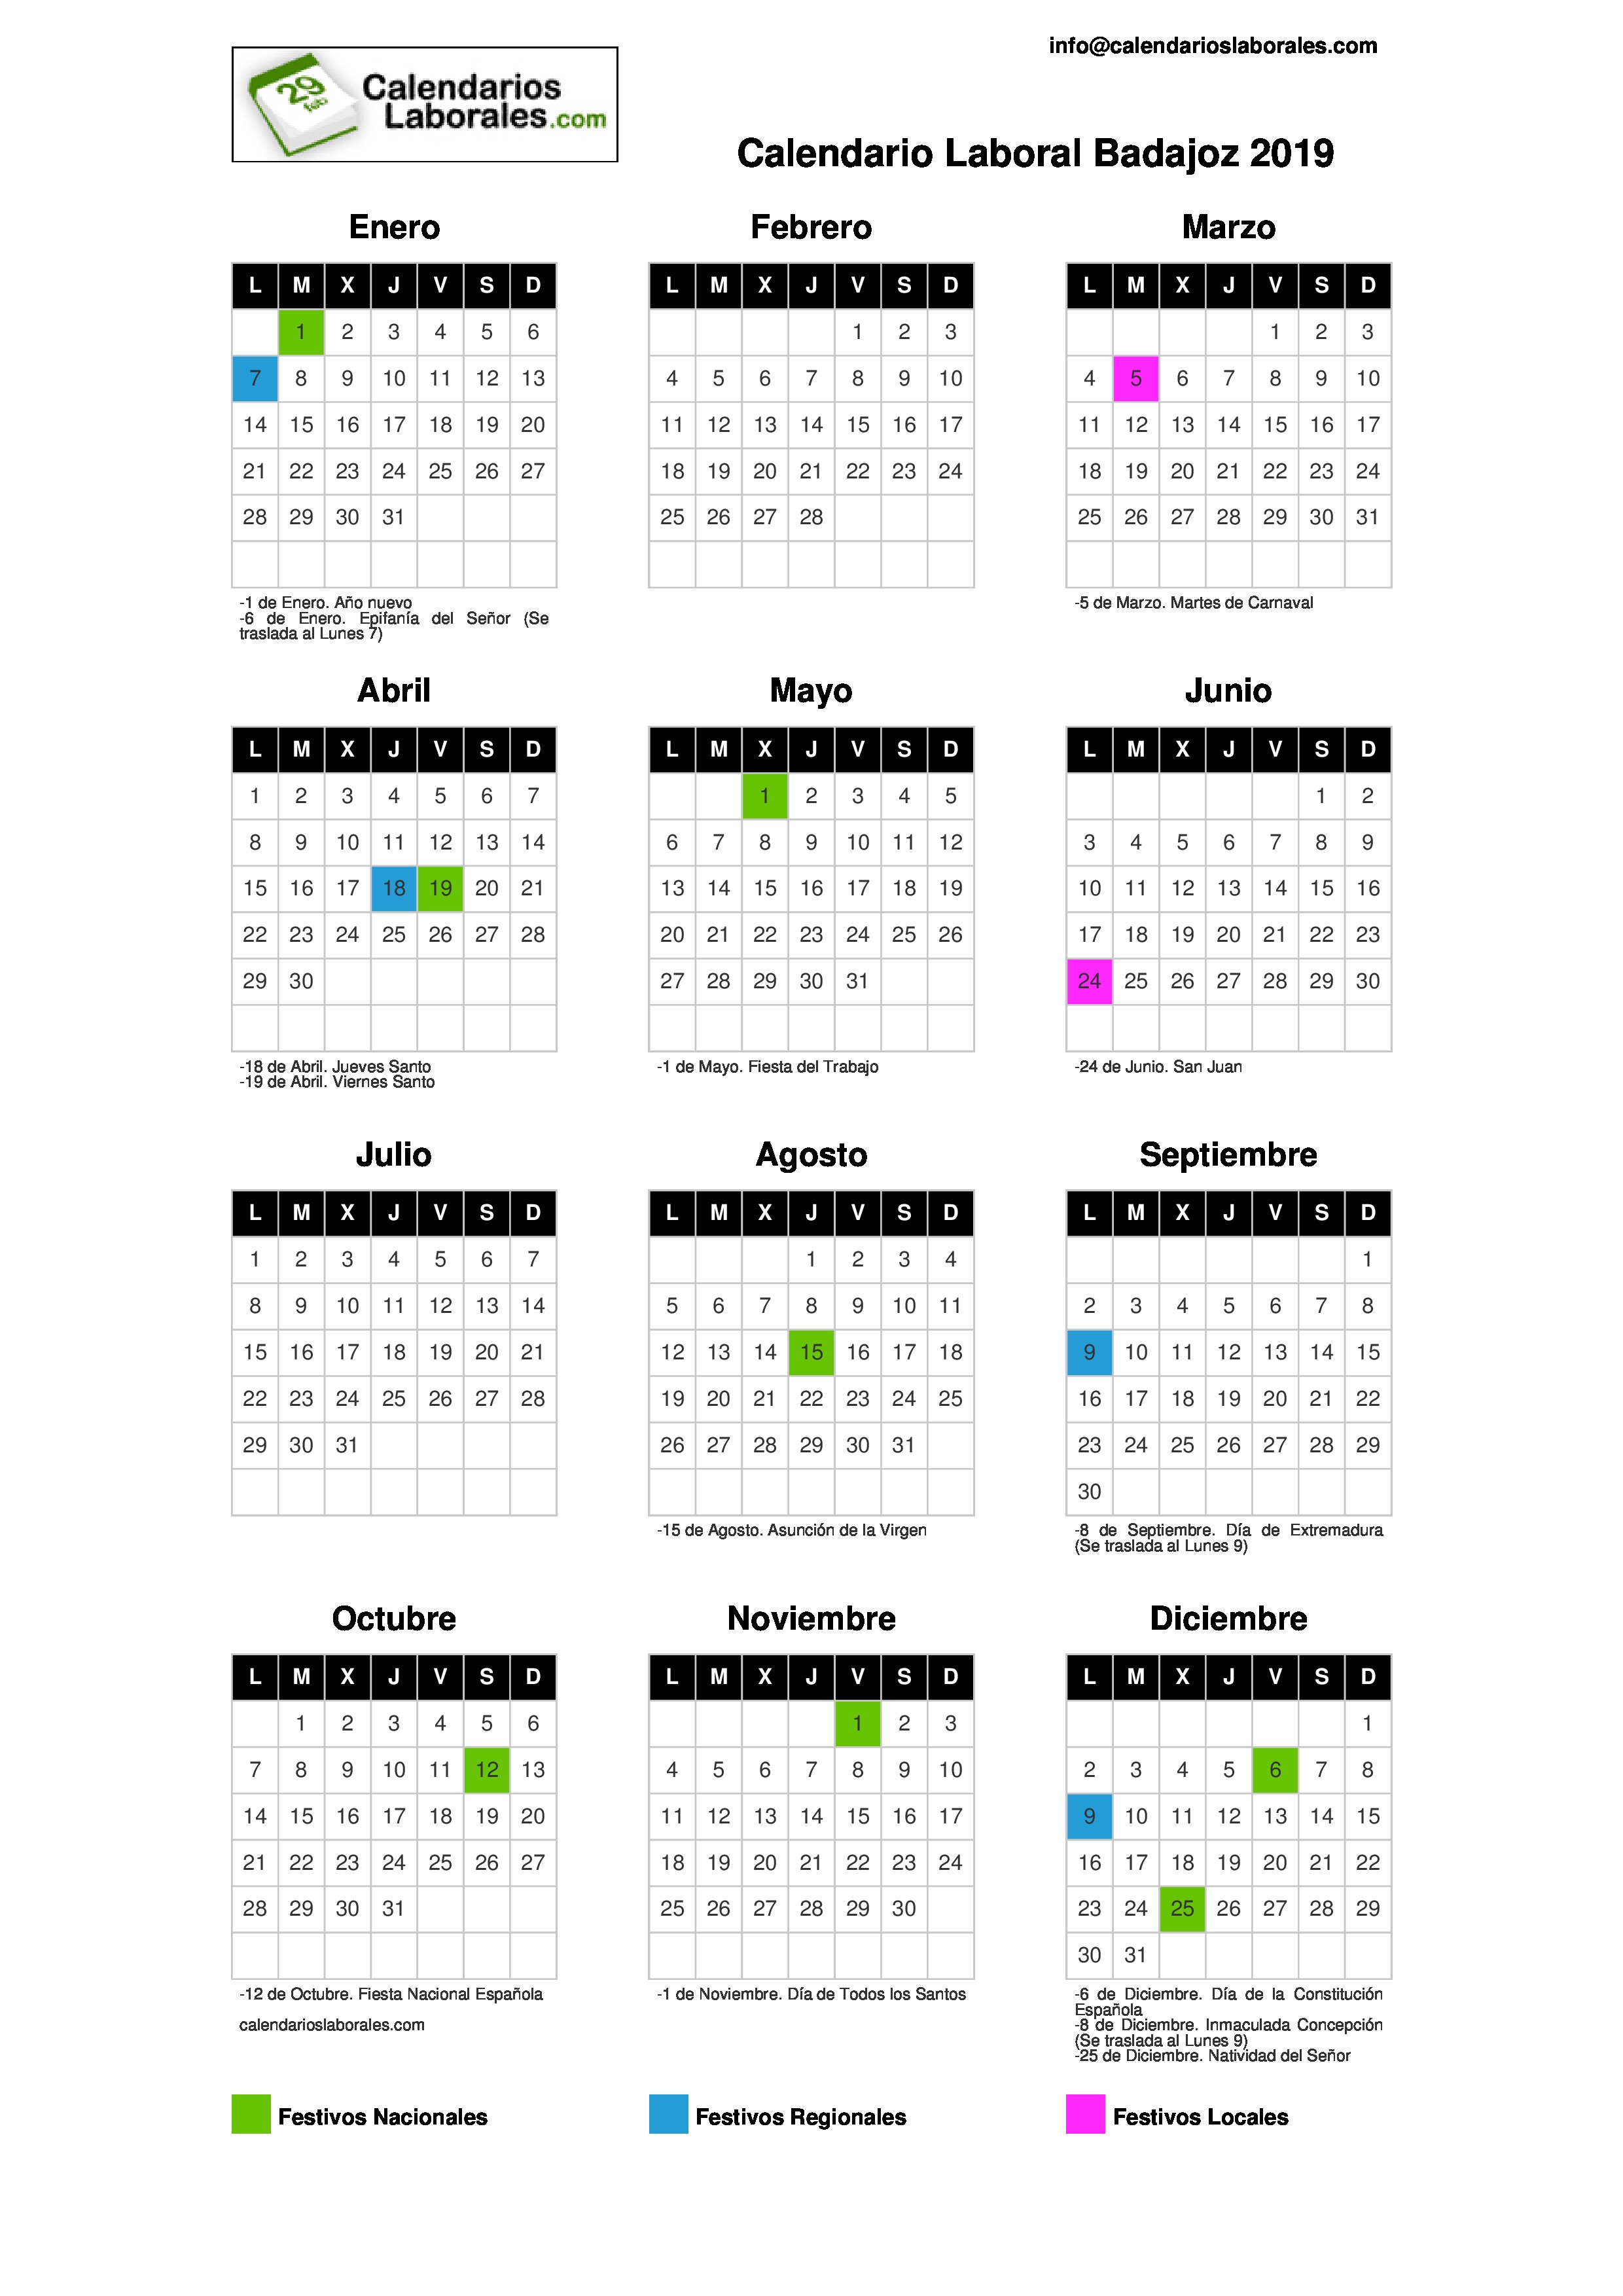 Calendario Laboral Badajoz 2019